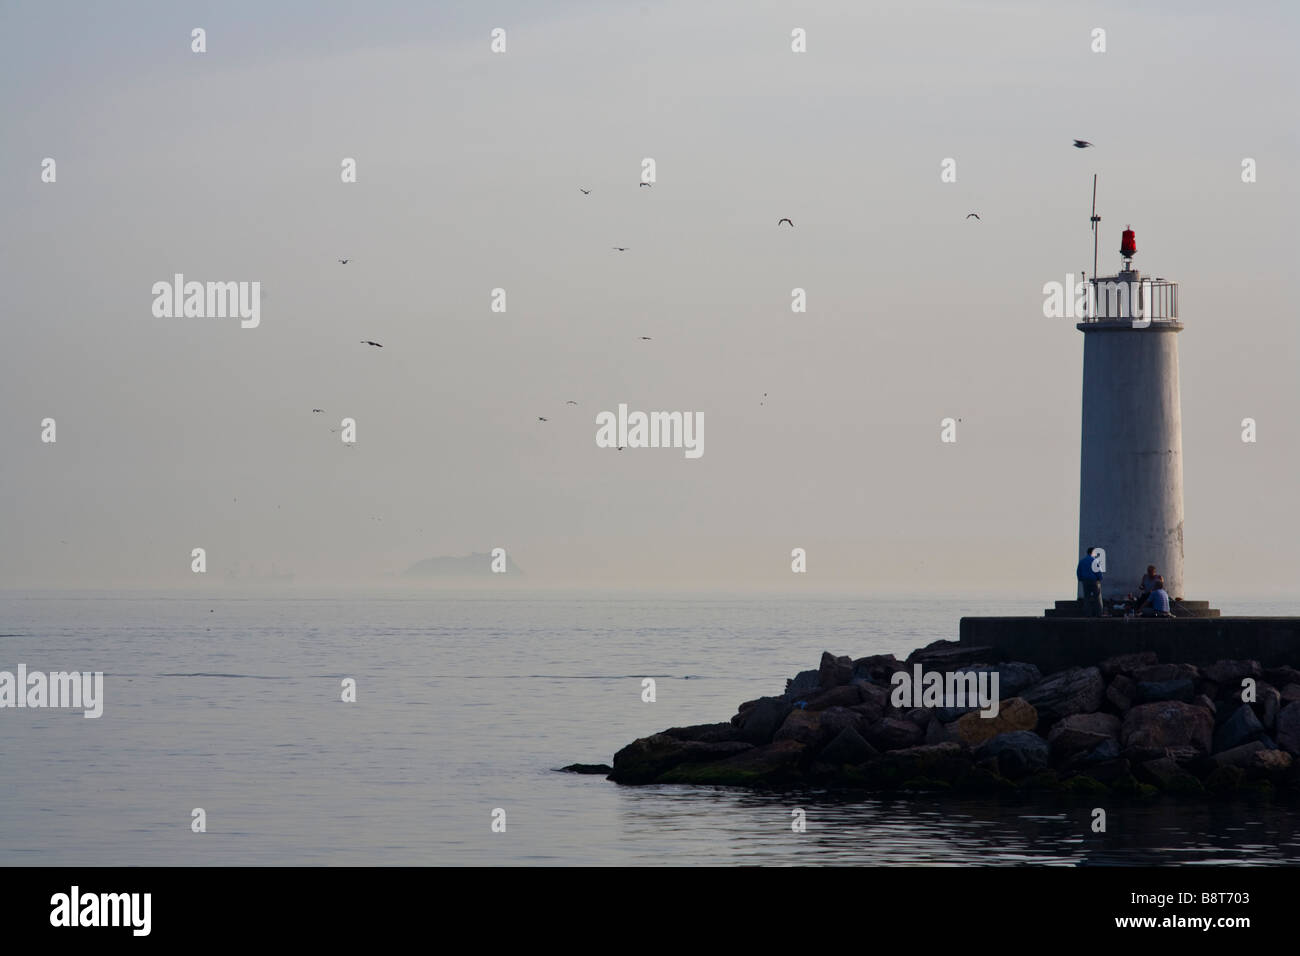 A lighthouse on the Bosphorus, Istanbul, Turkey. Stock Photo